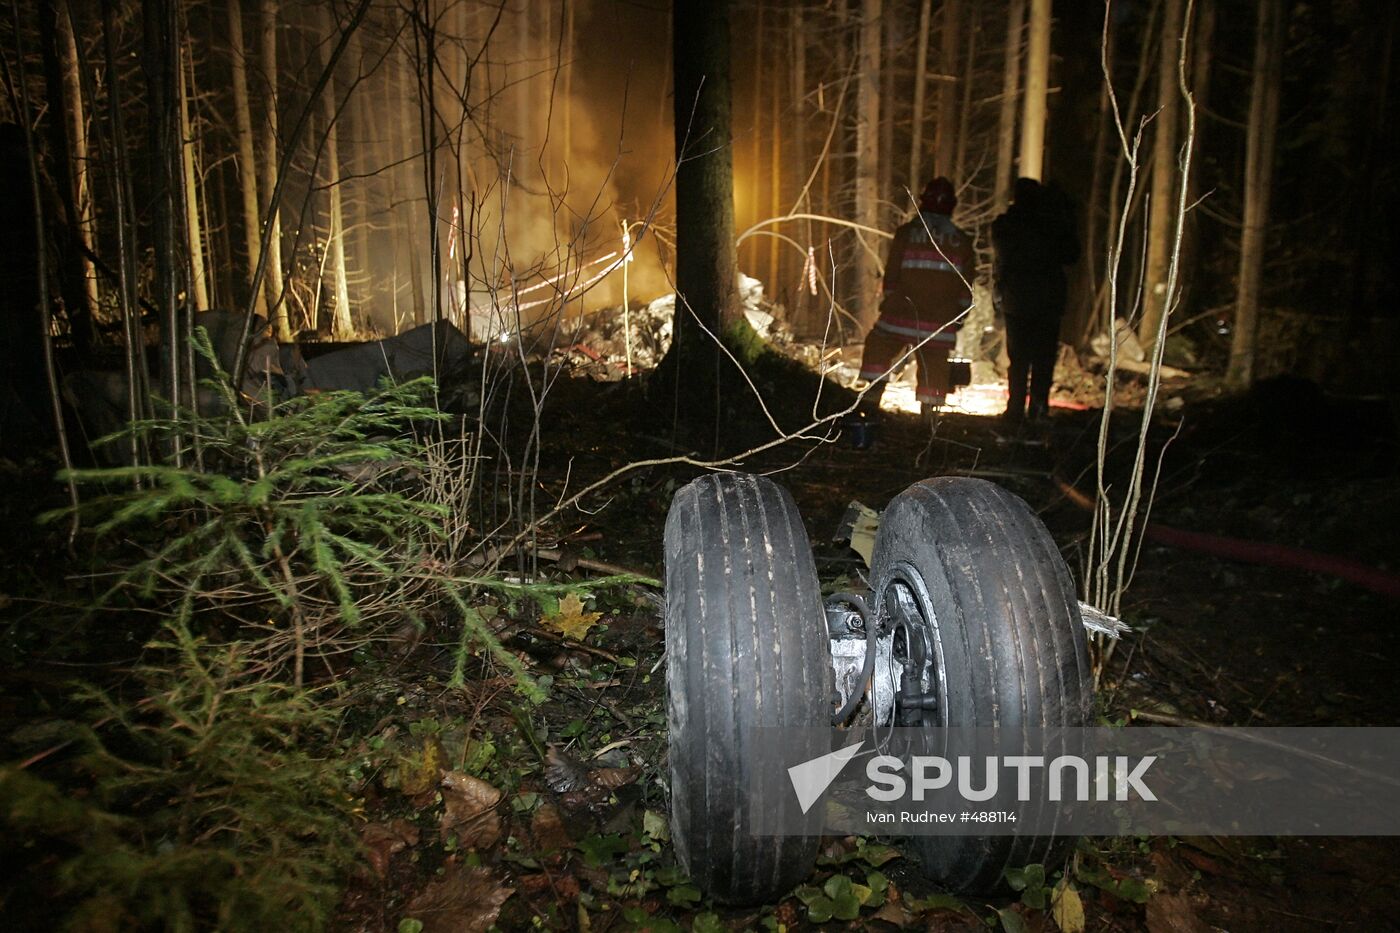 S-Air passenger aircraft crashes outside Minsk